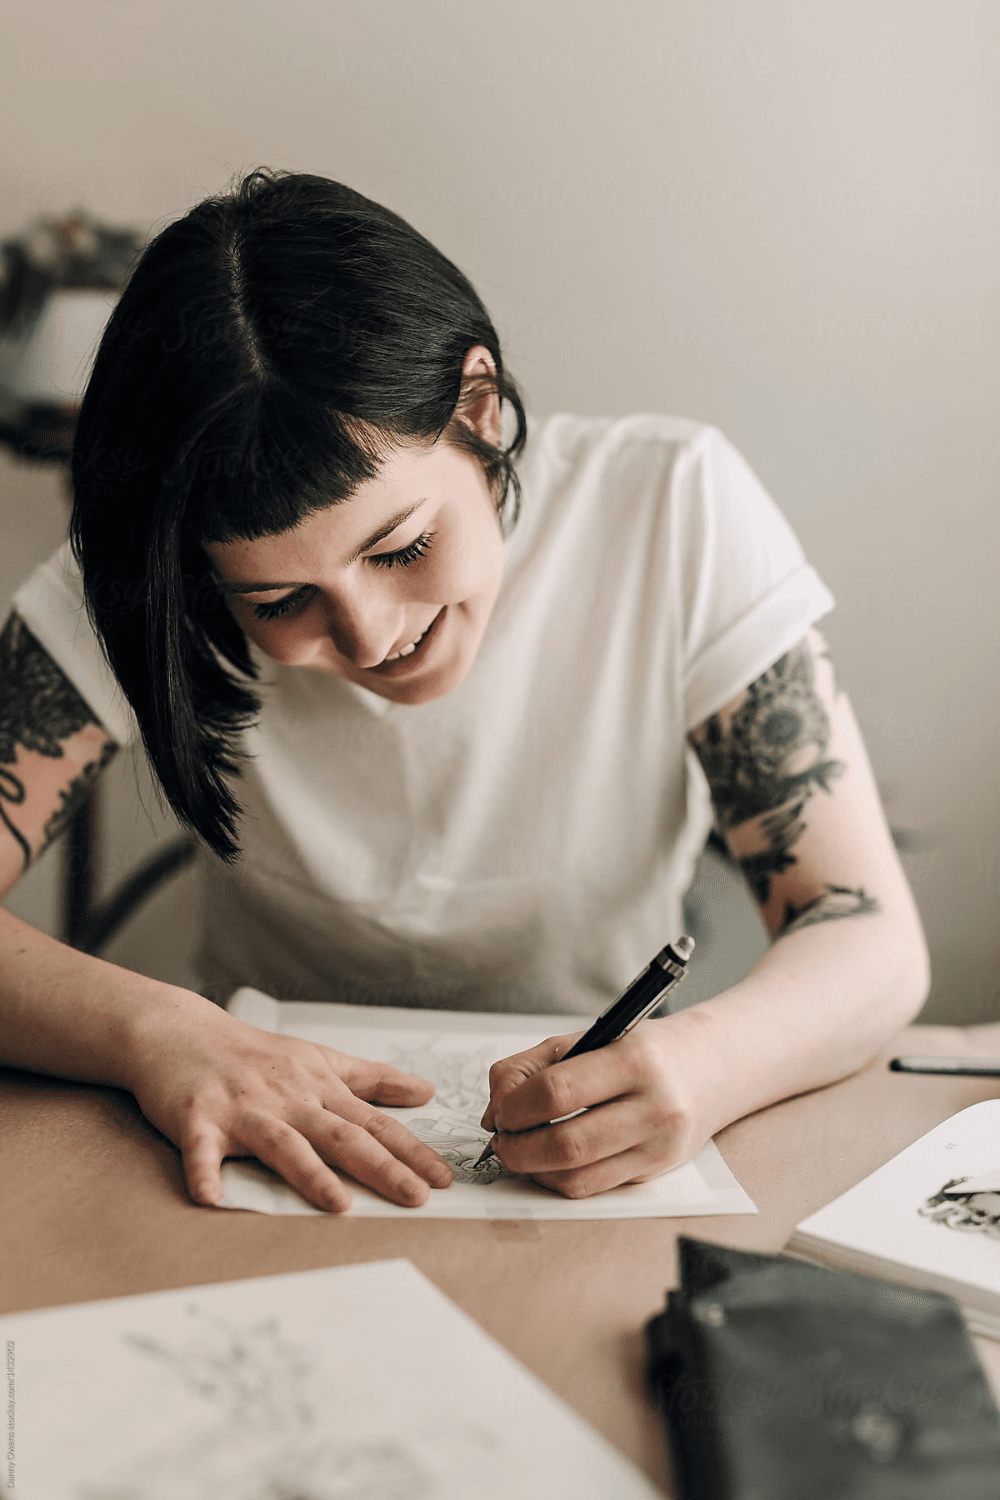 Tattoo Artist Careers - Careers Guide